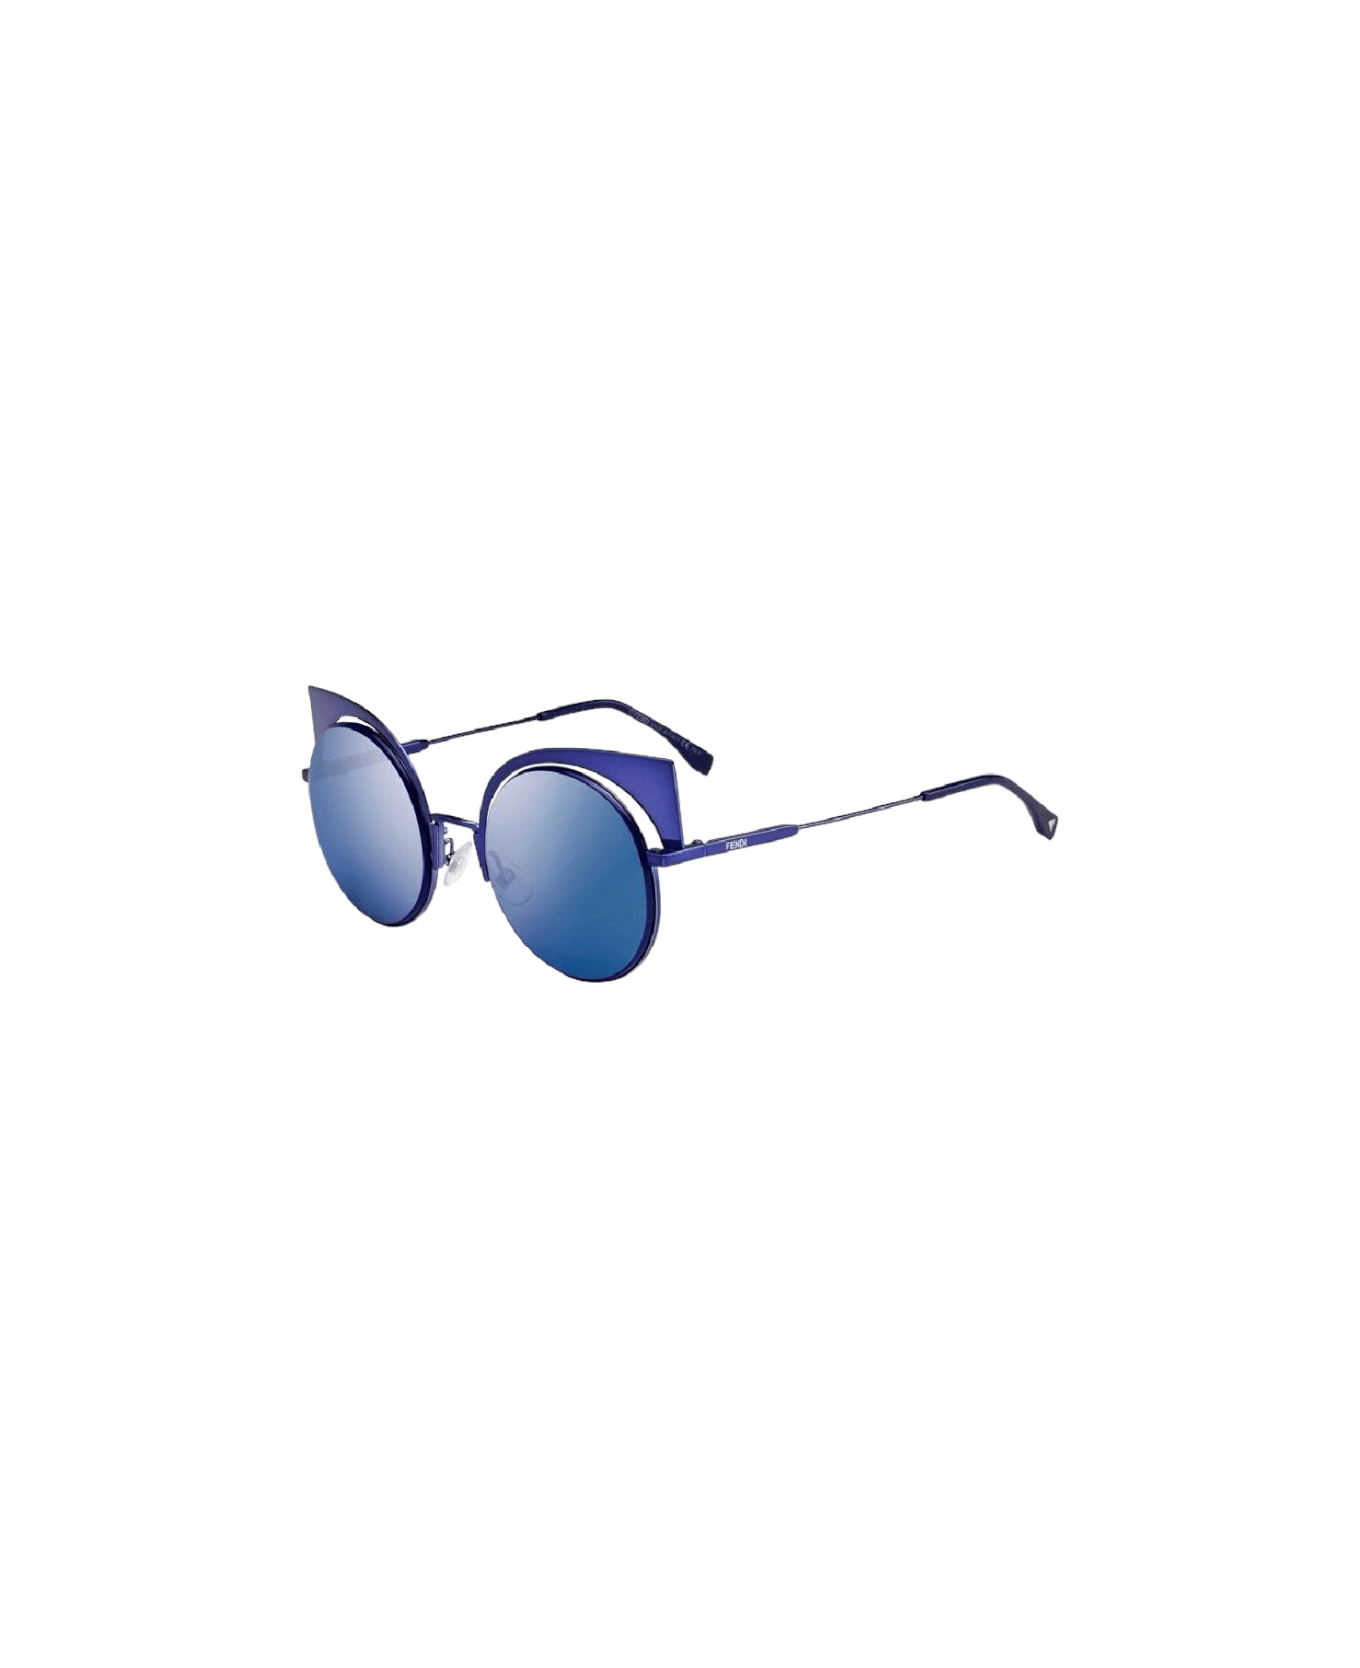 Fendi Ff 0177 - Metallic Blue Sunglasses